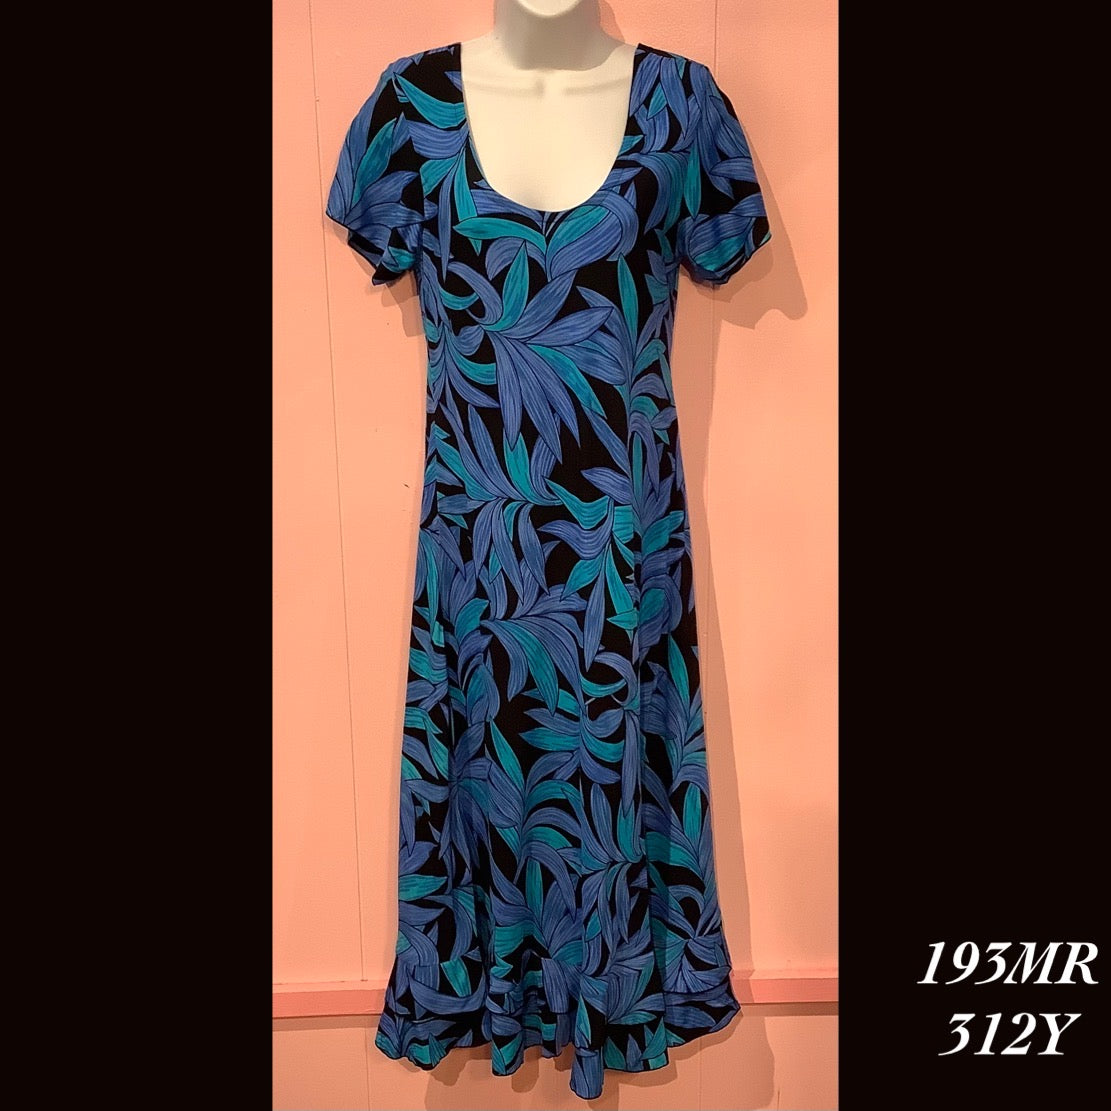 193MR - 312Y , Sleeved bias cut dress mid length with ruffle